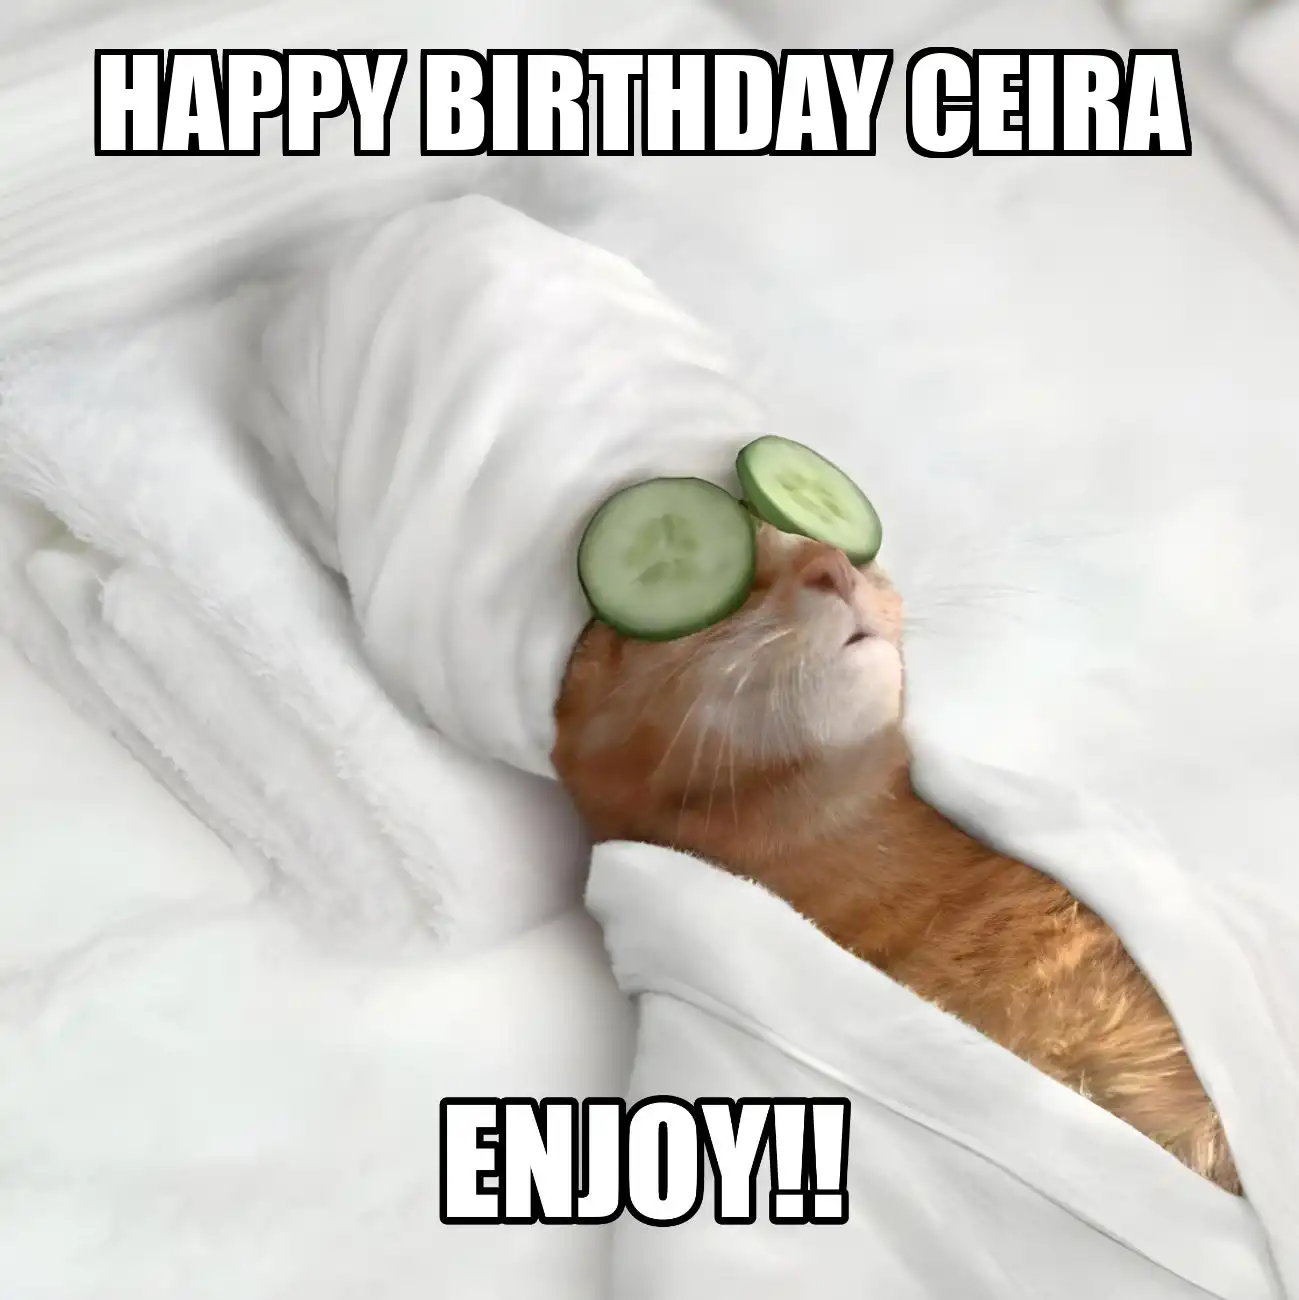 Happy Birthday Ceira Enjoy Cat Meme